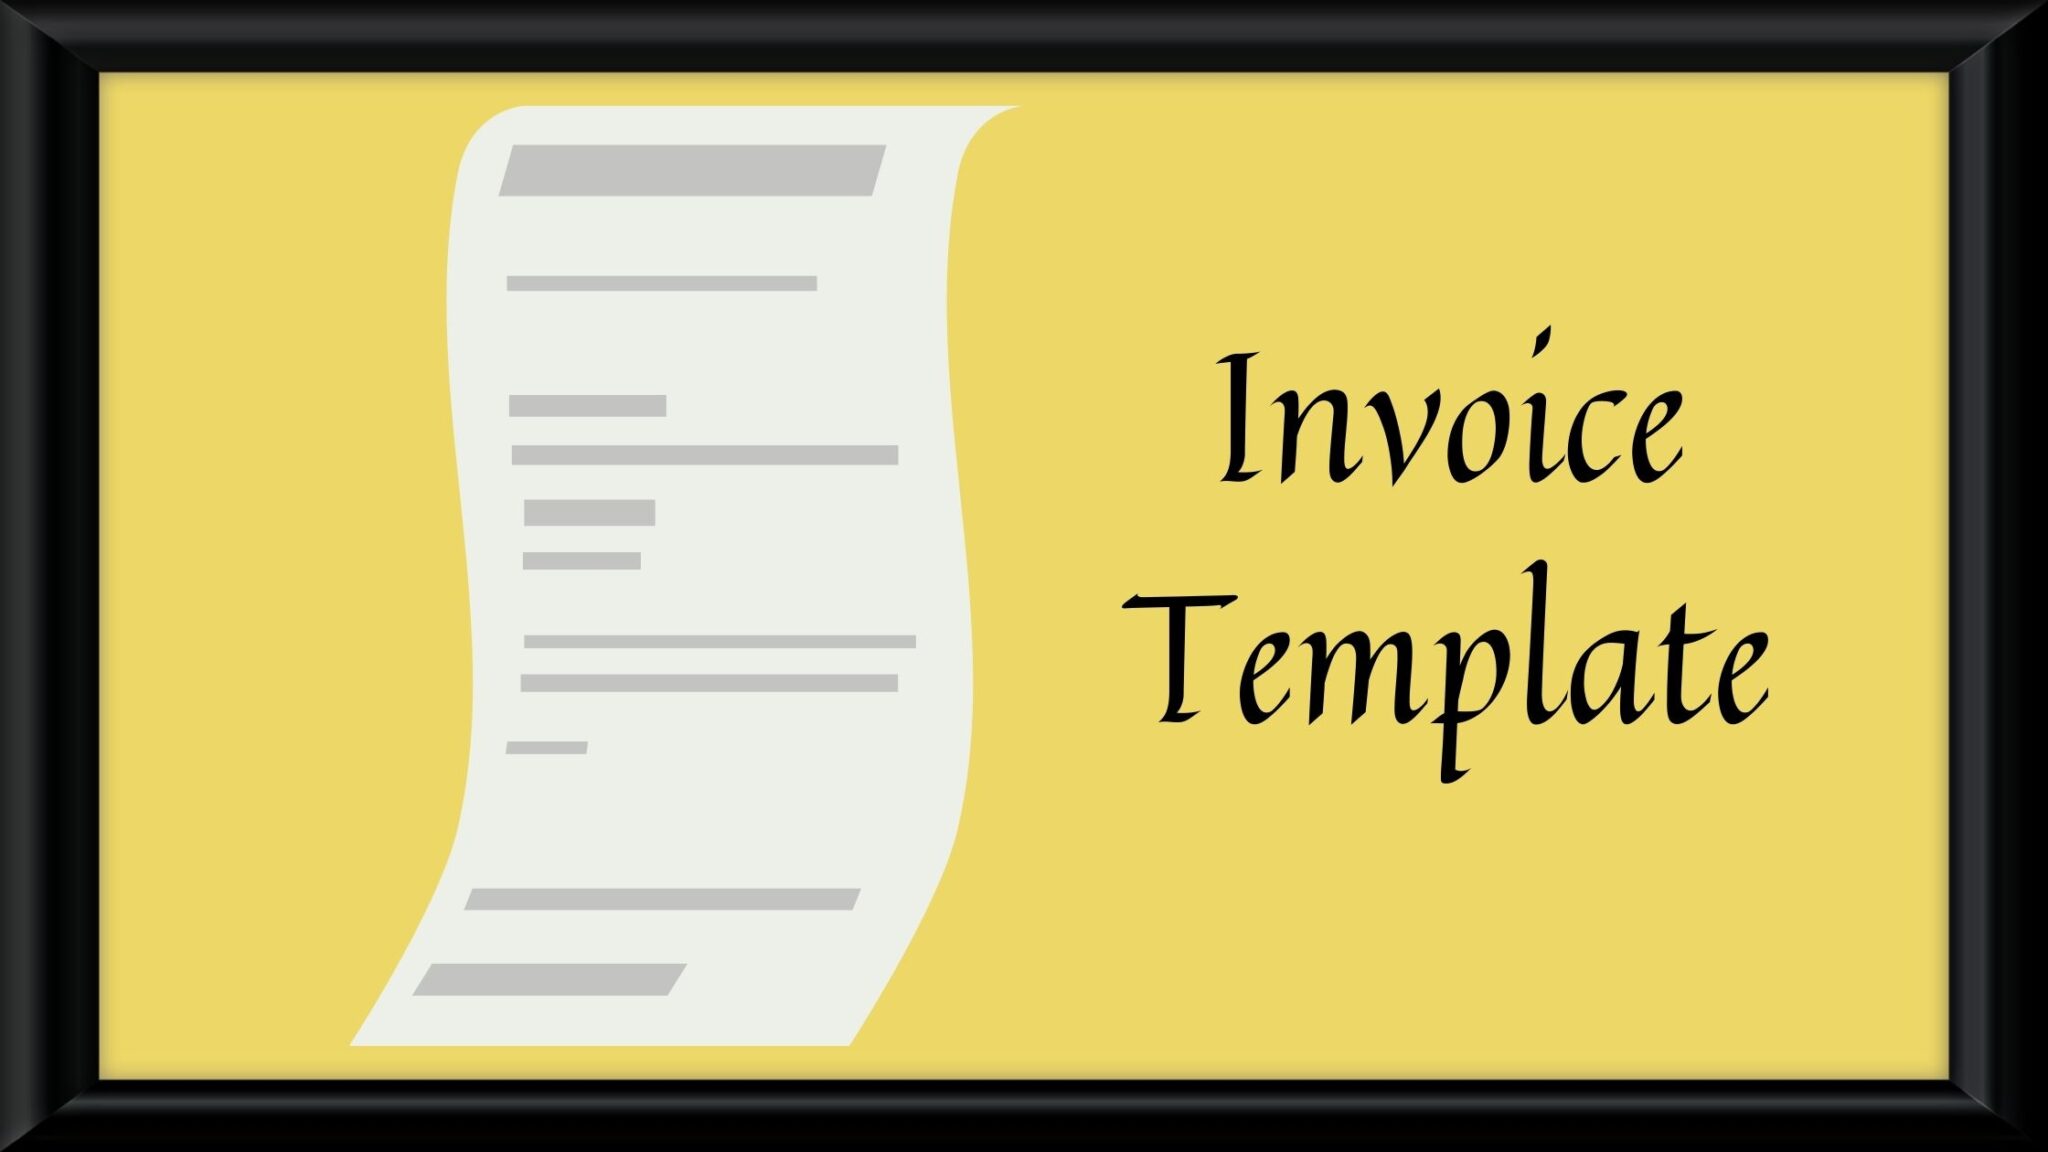 invoice-quotation-template-designs-invoice-ninja